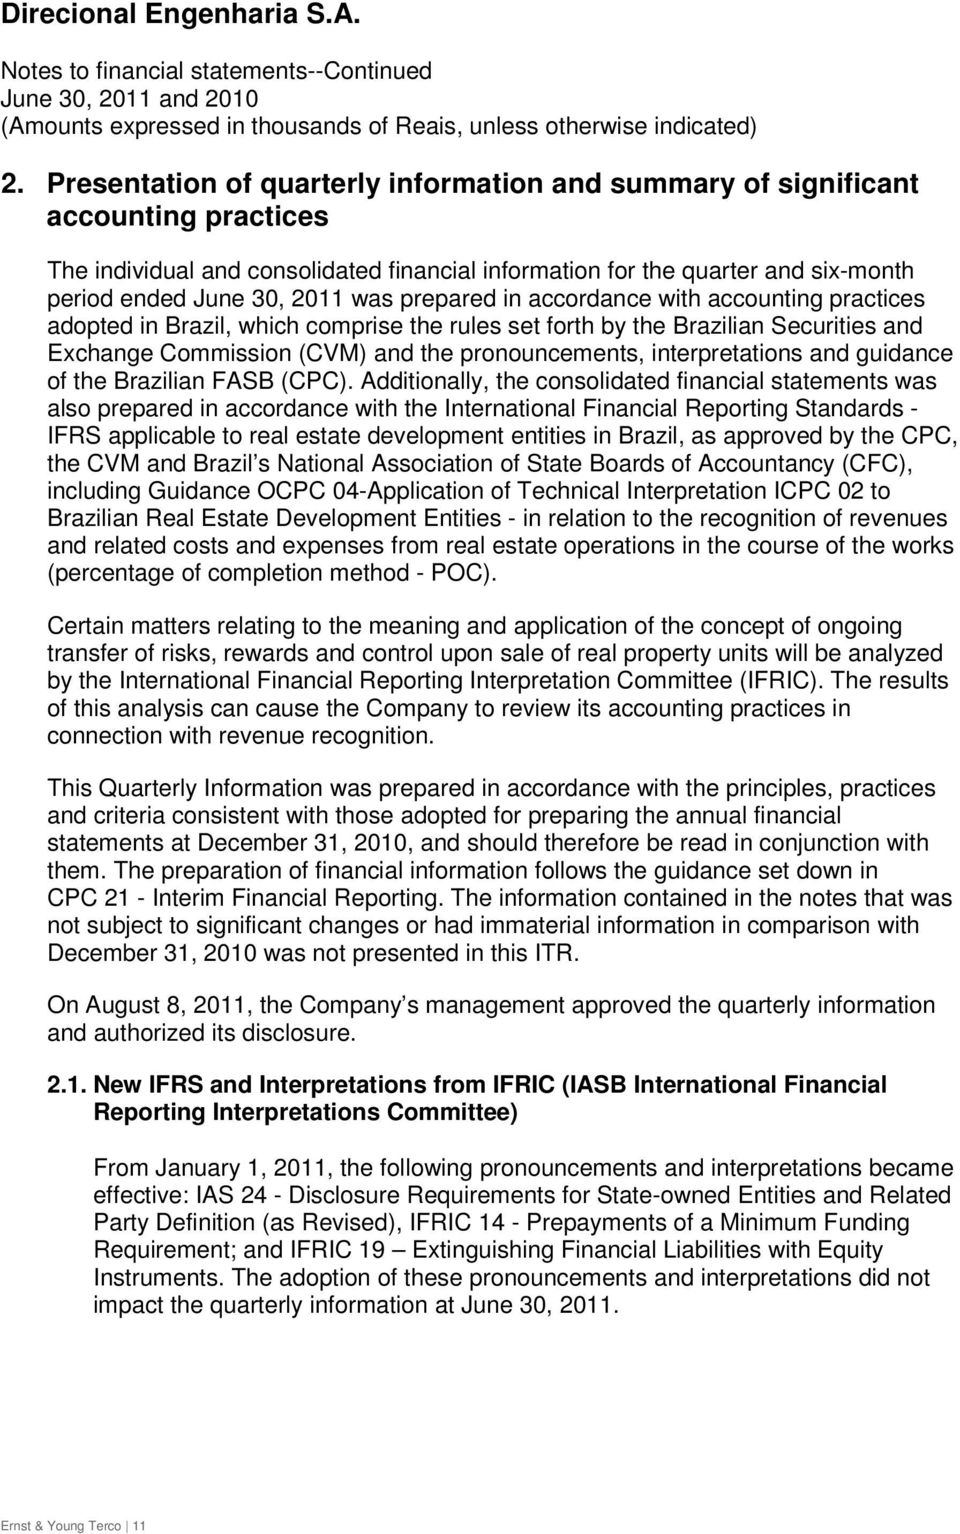 interpretations and guidance of the Brazilian FASB (CPC).